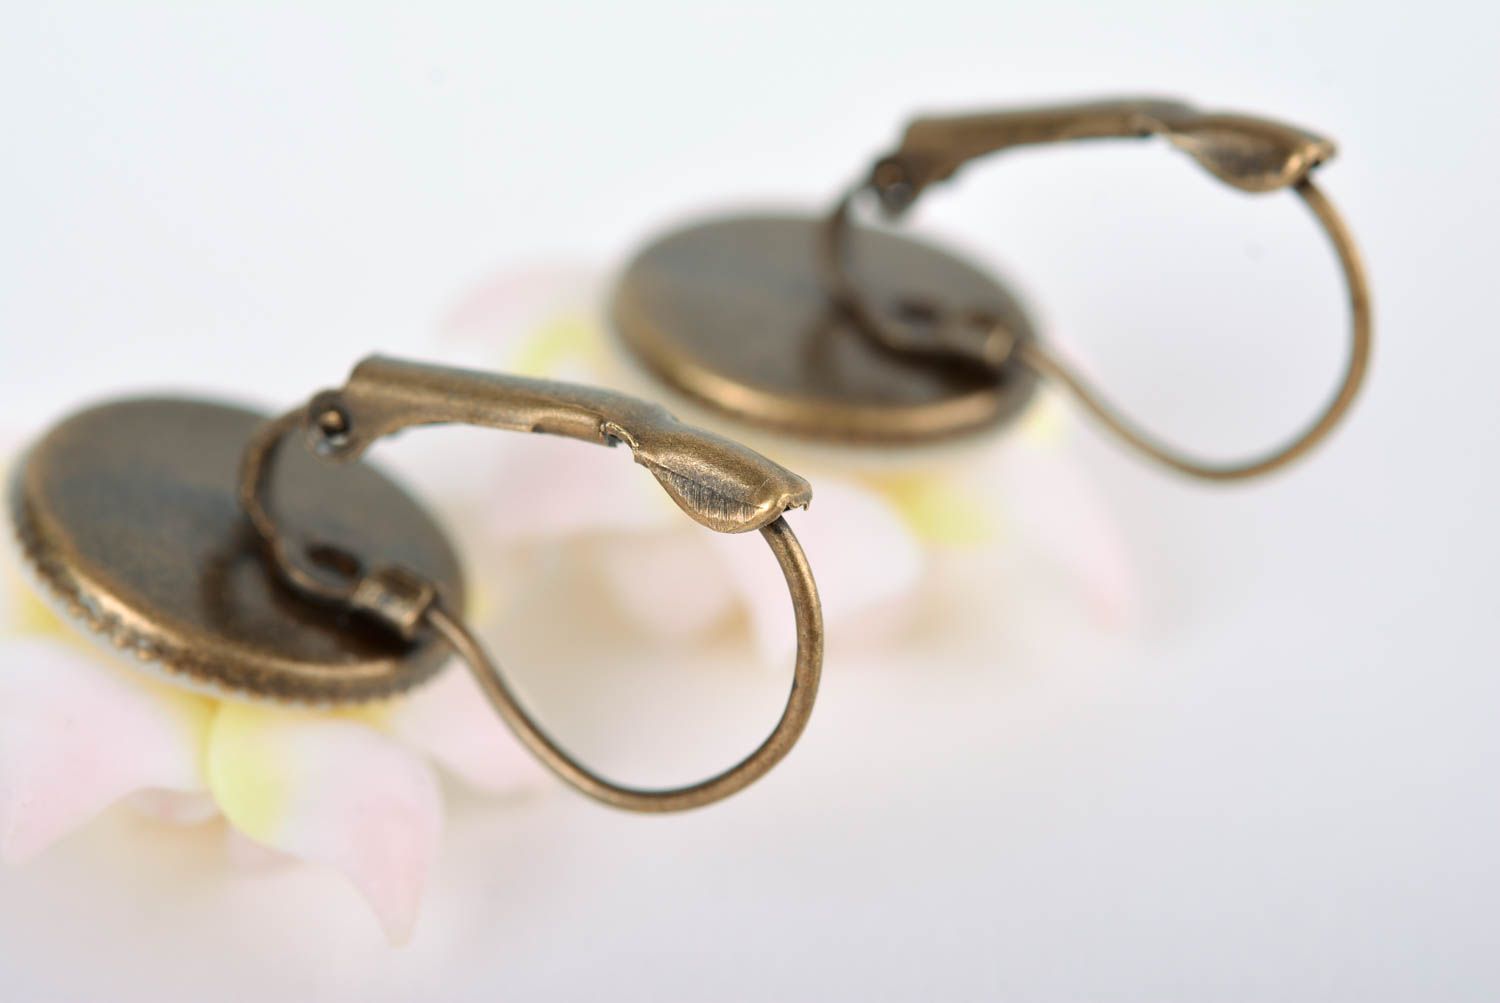 Handmade polymer clay earrings designer jewelry handmade accessories for women photo 3